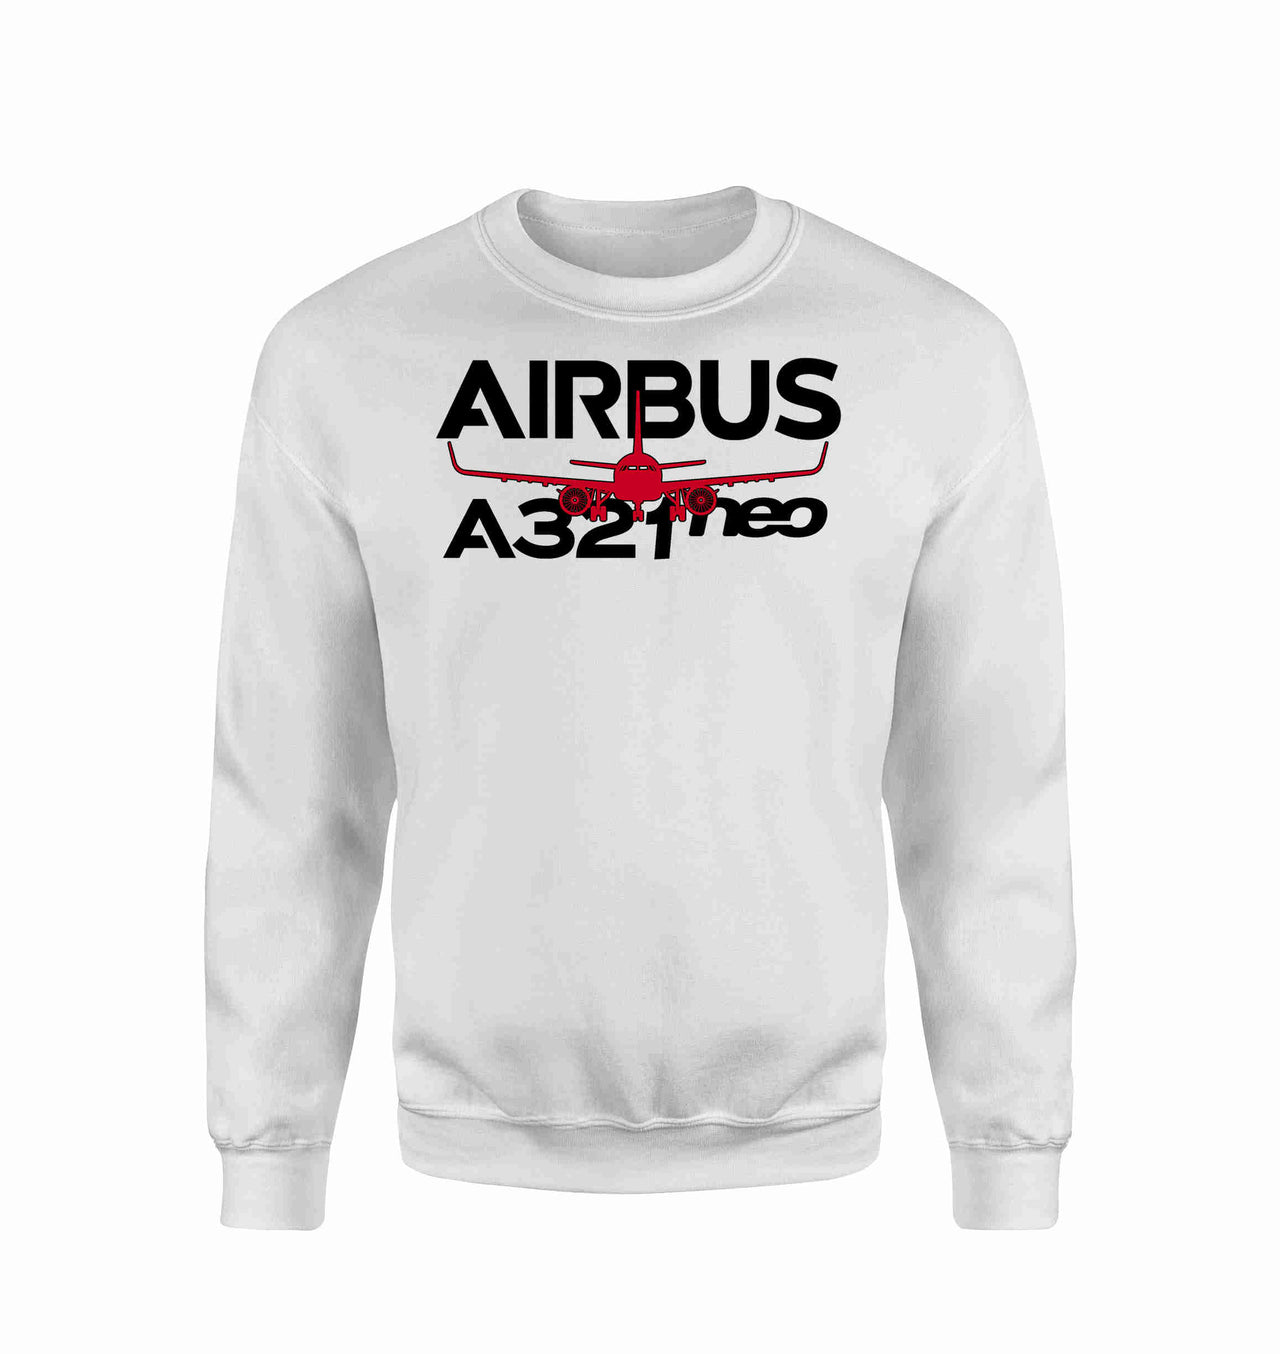 Amazing Airbus A321neo Designed Sweatshirts